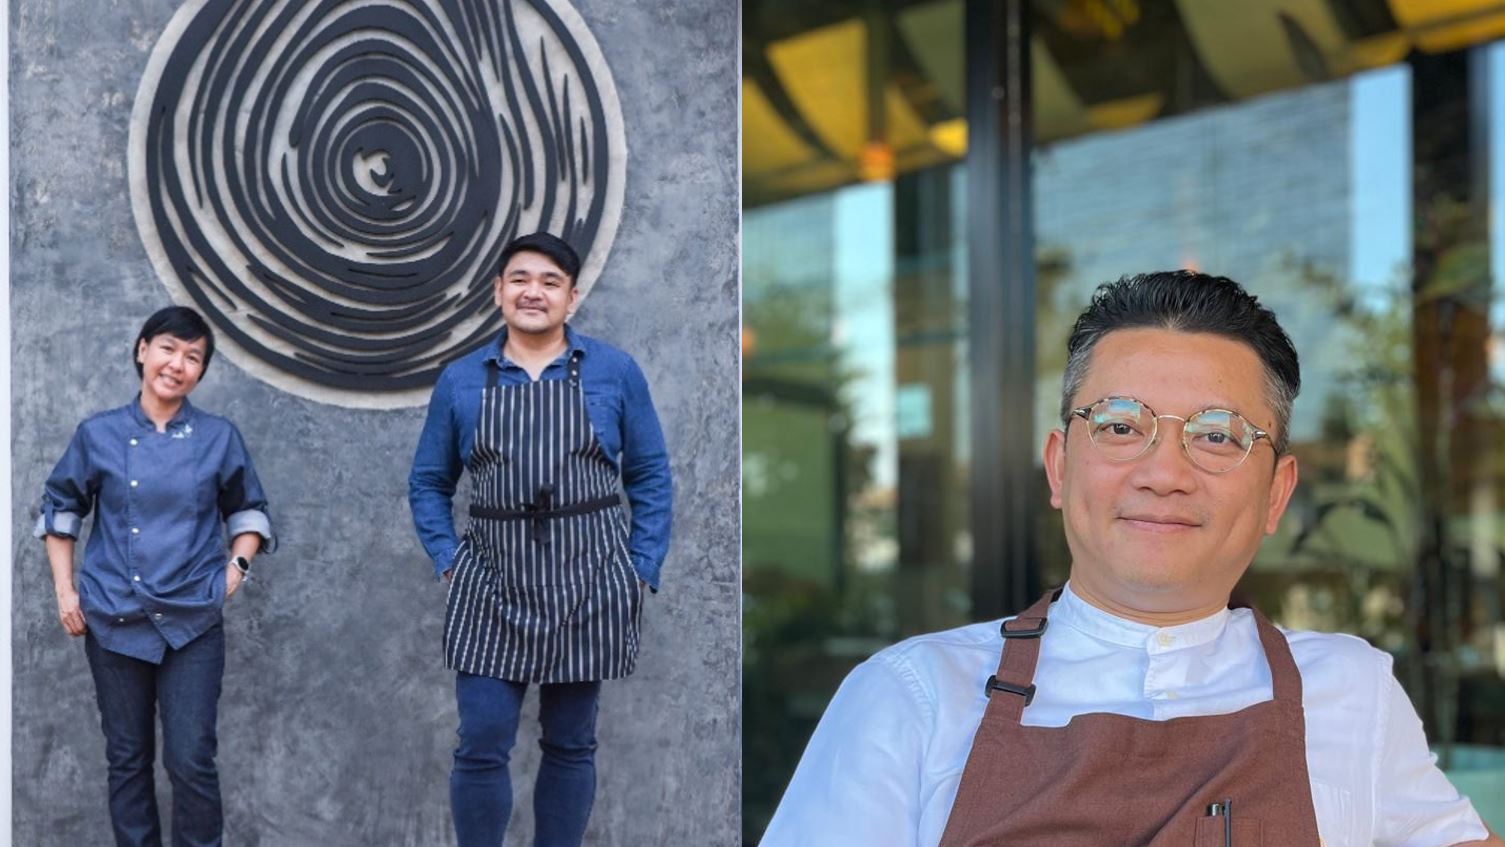 Wynn partners with three award-winning Thai guest chefs to present 'Savor a Taste of Thailand' guest chef events at Wynn